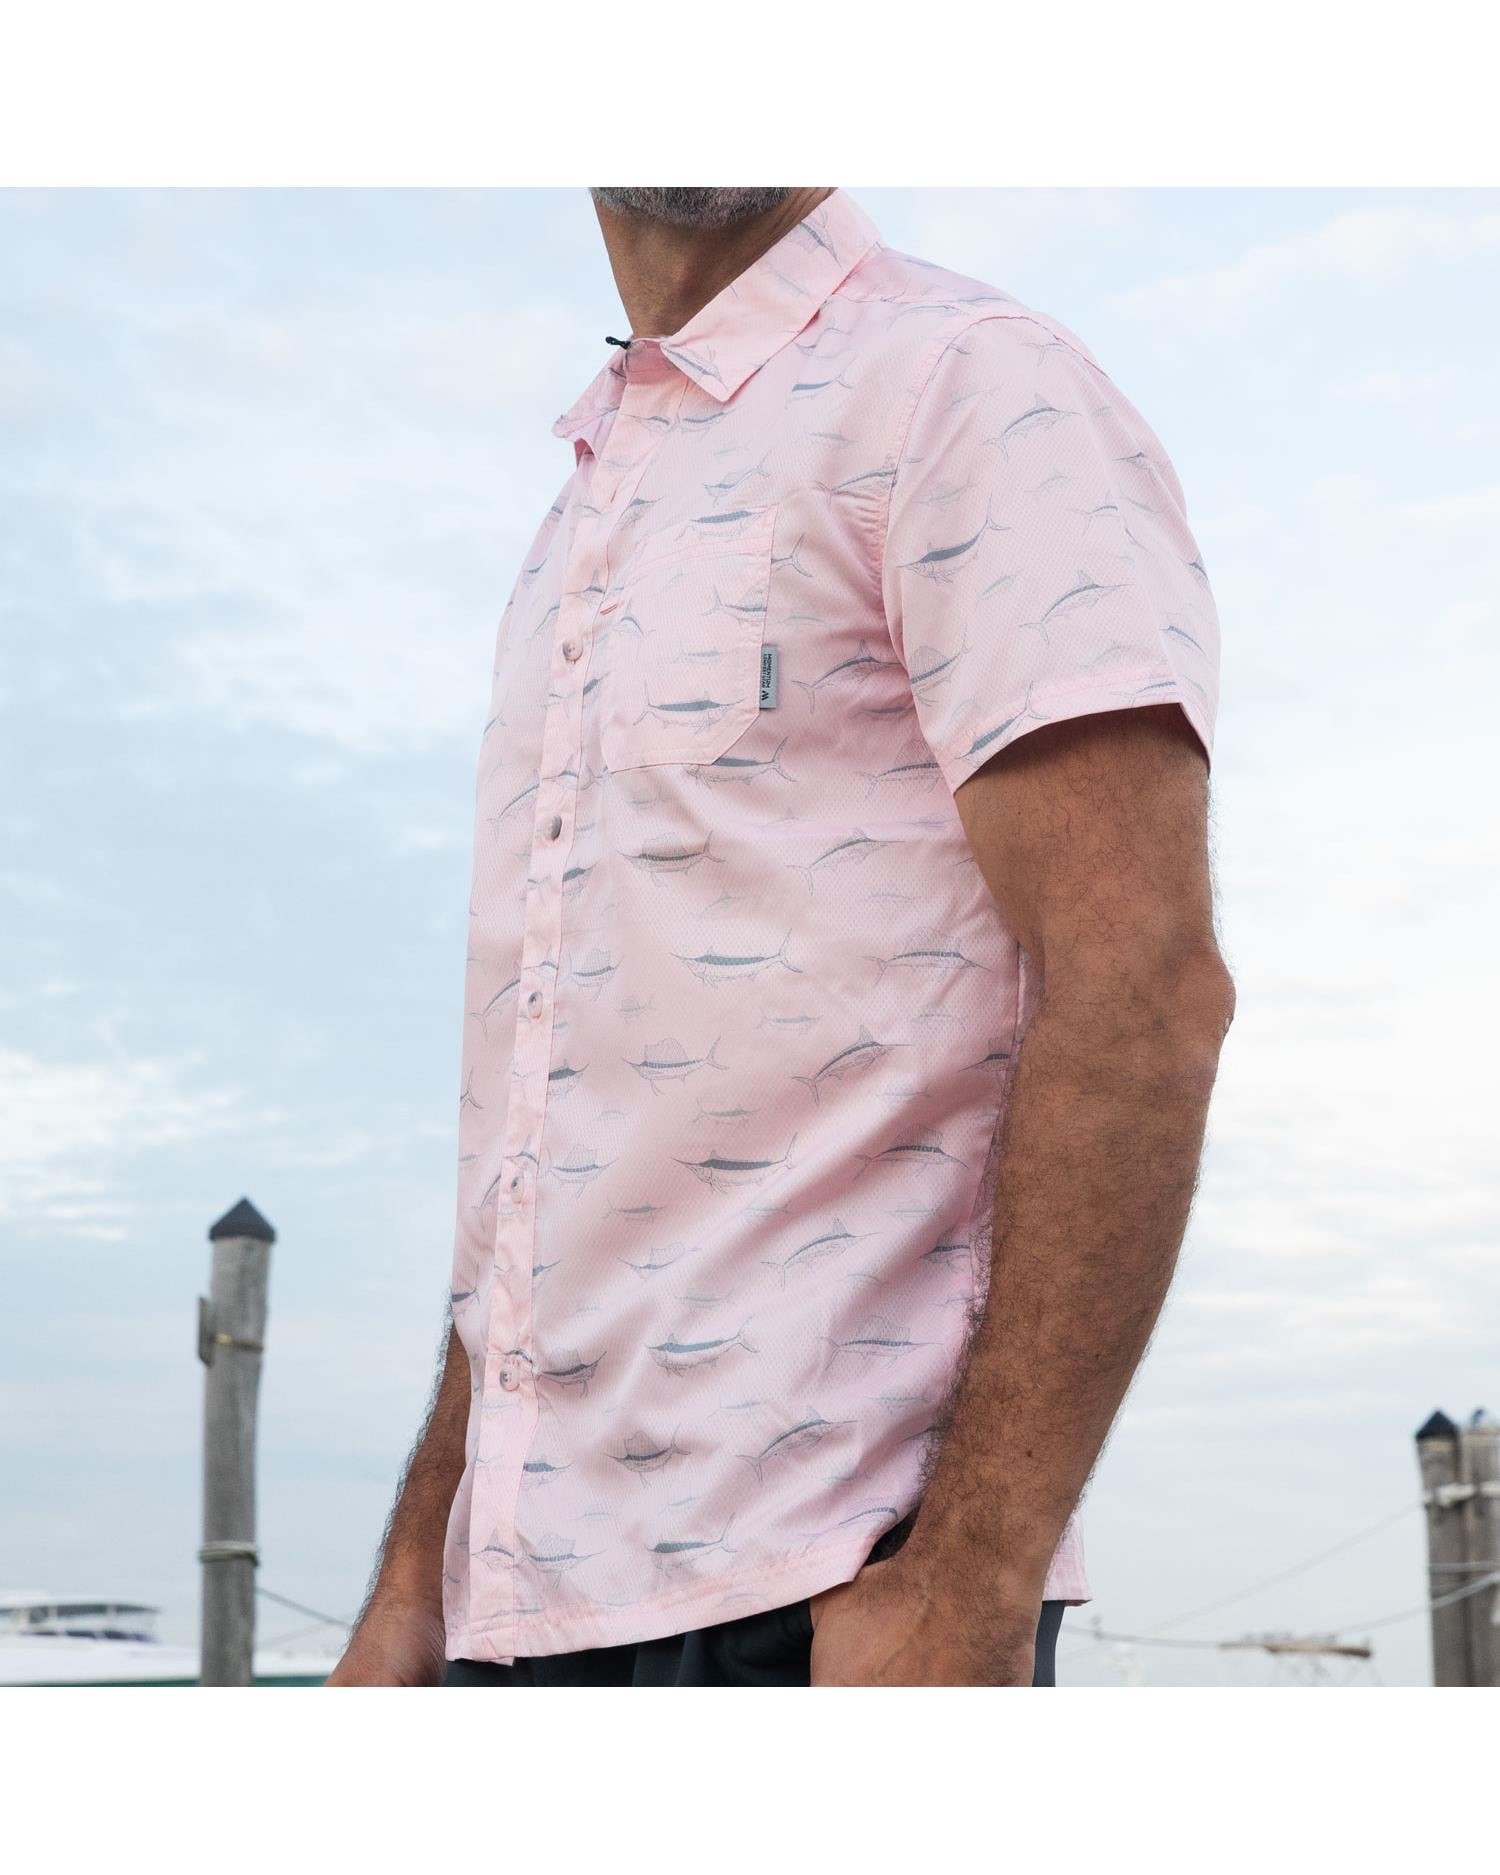 Mens Performance Short Sleeve Button Up Quick Dry Shirt 50+ UPF Fishing  Shirt, White, Size: XL, Momentum Comfort Gear 